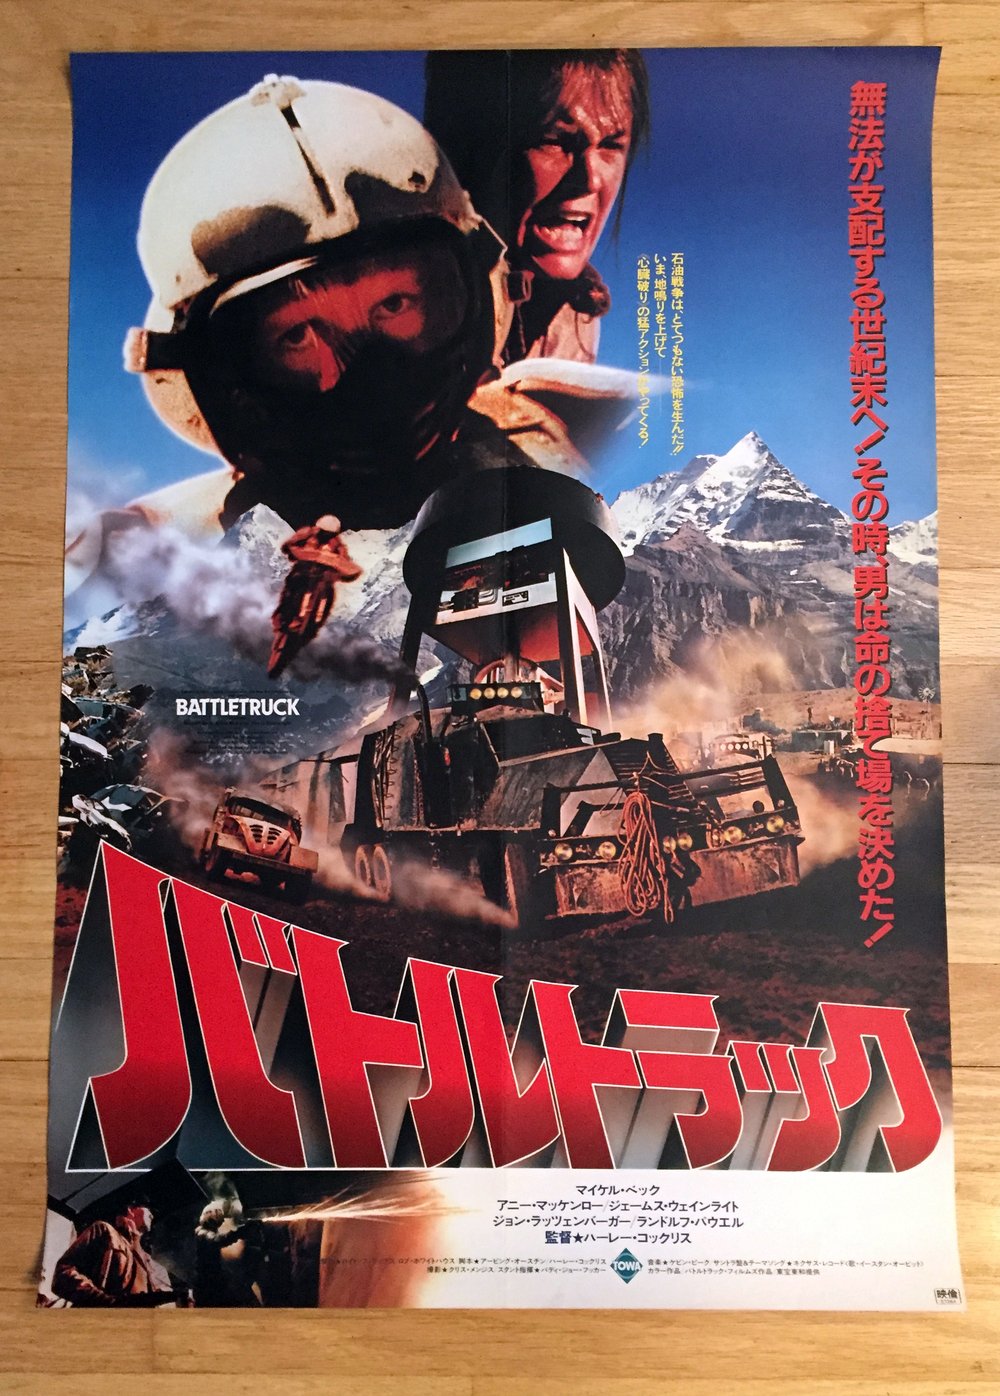 1982 BATTLETRUCK aka WARRIORS OF THE TWENTY-FIRST CENTURY Original Japanese B2 Movie poster